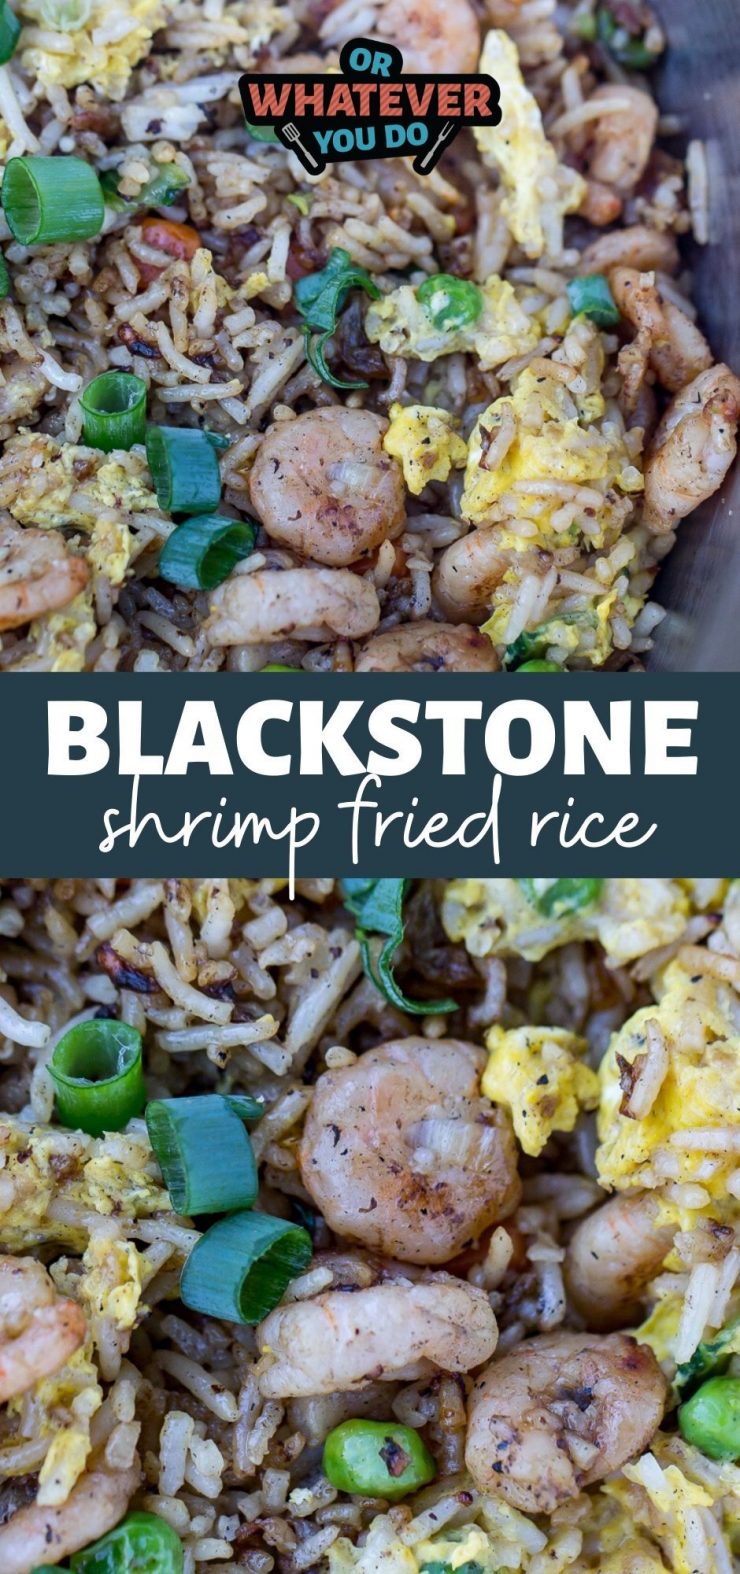 Blackstone Shrimp Fried Rice